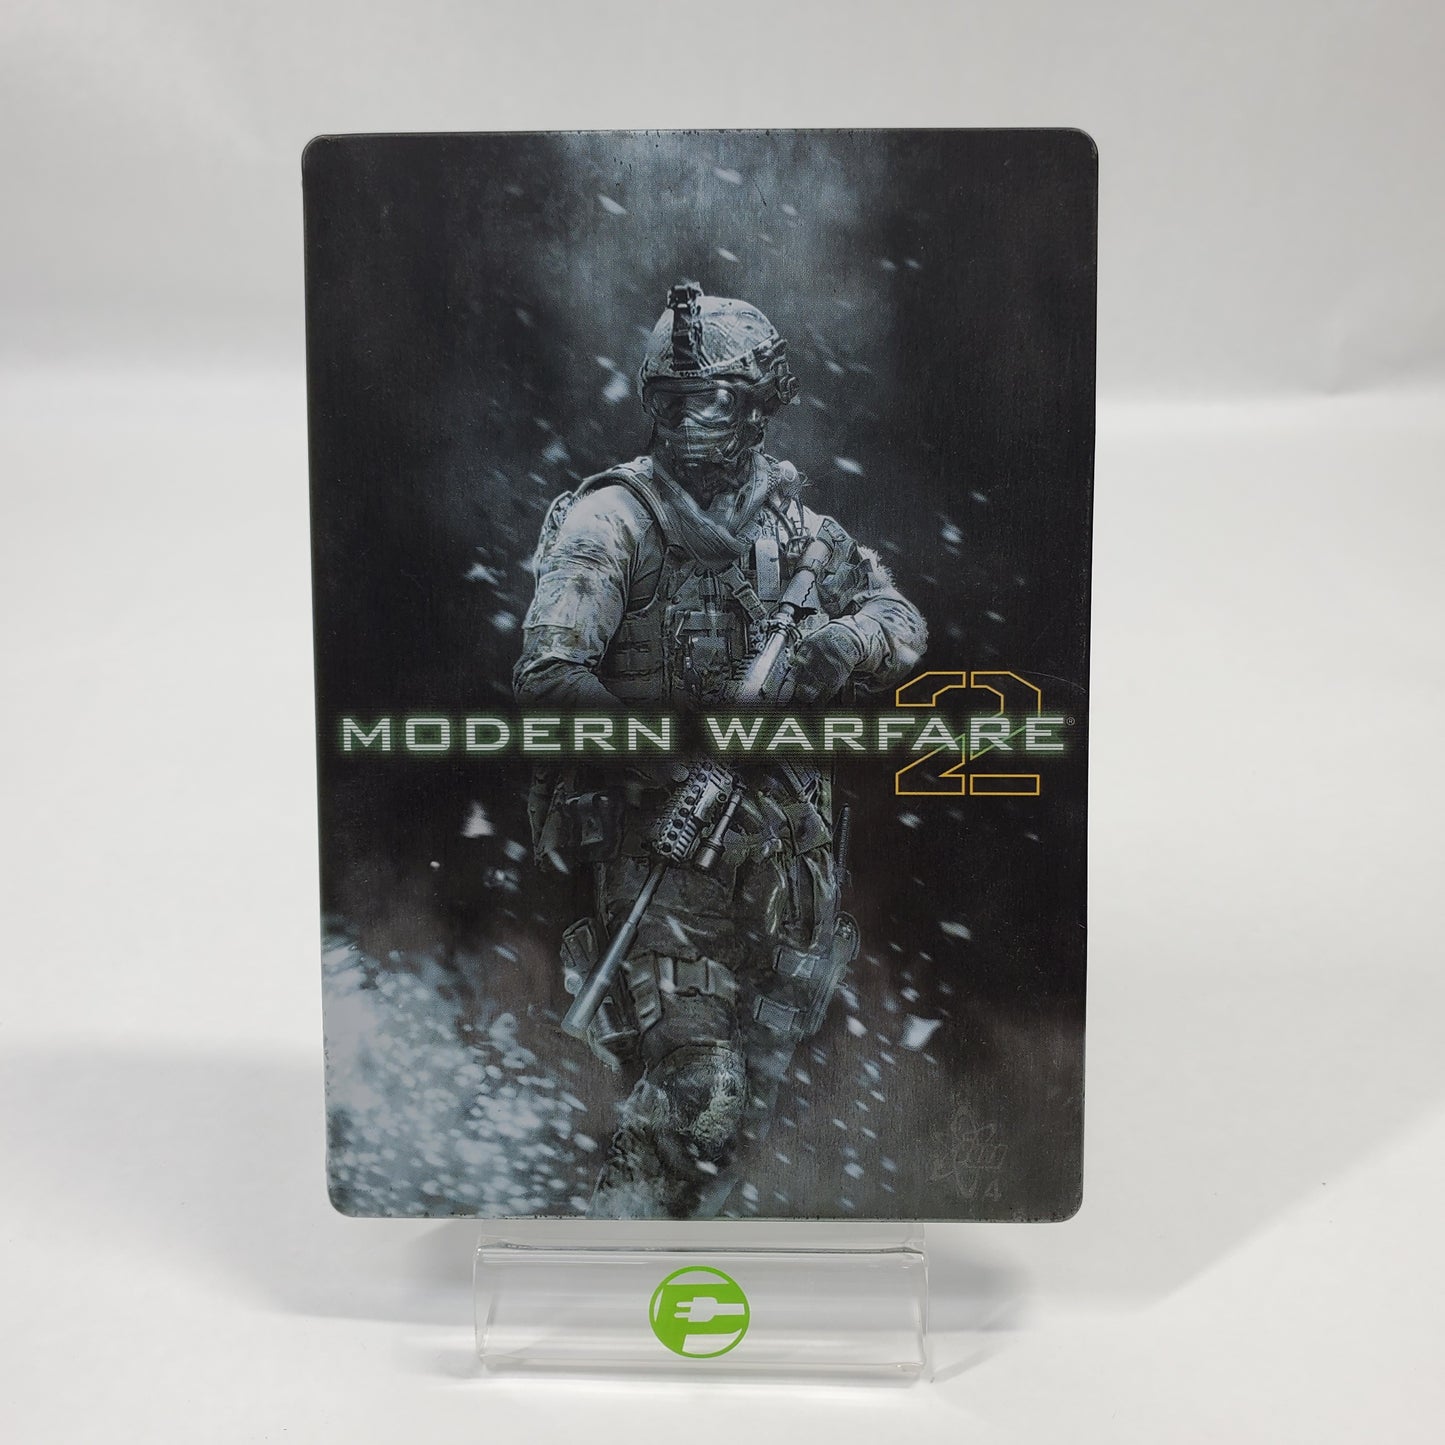 Call of Duty Modern Warfare 2 [Hardened Edition] (Microsoft Xbox 360, 2009)